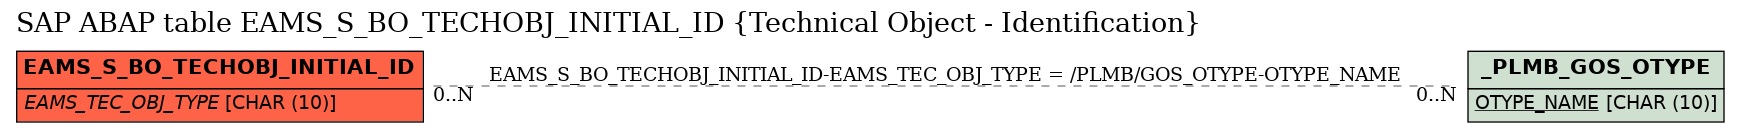 E-R Diagram for table EAMS_S_BO_TECHOBJ_INITIAL_ID (Technical Object - Identification)